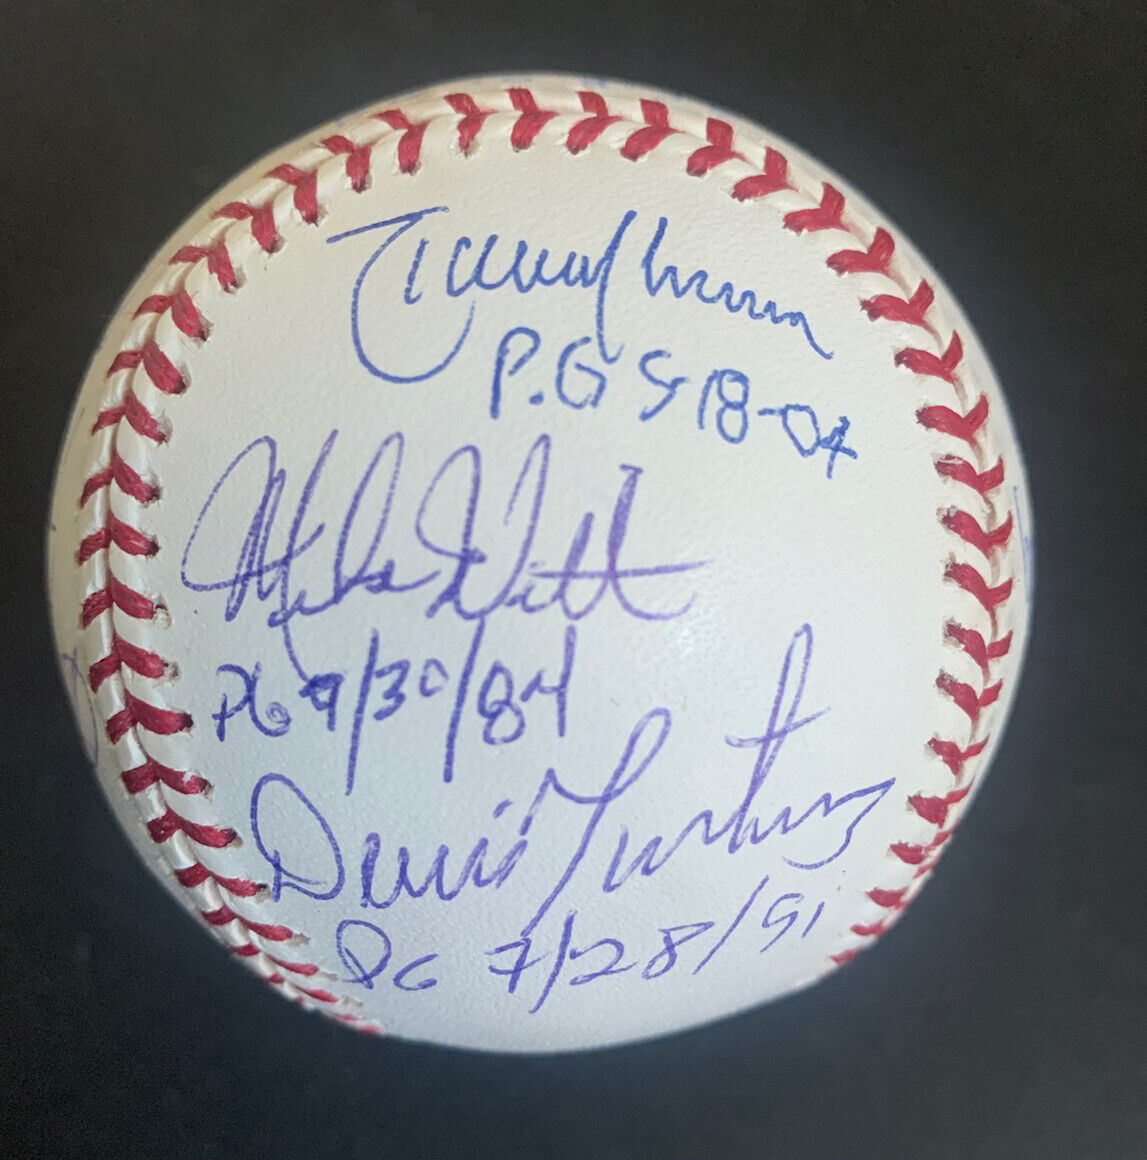 Miguel Cabrera Signed Baseball Glove (PSA)